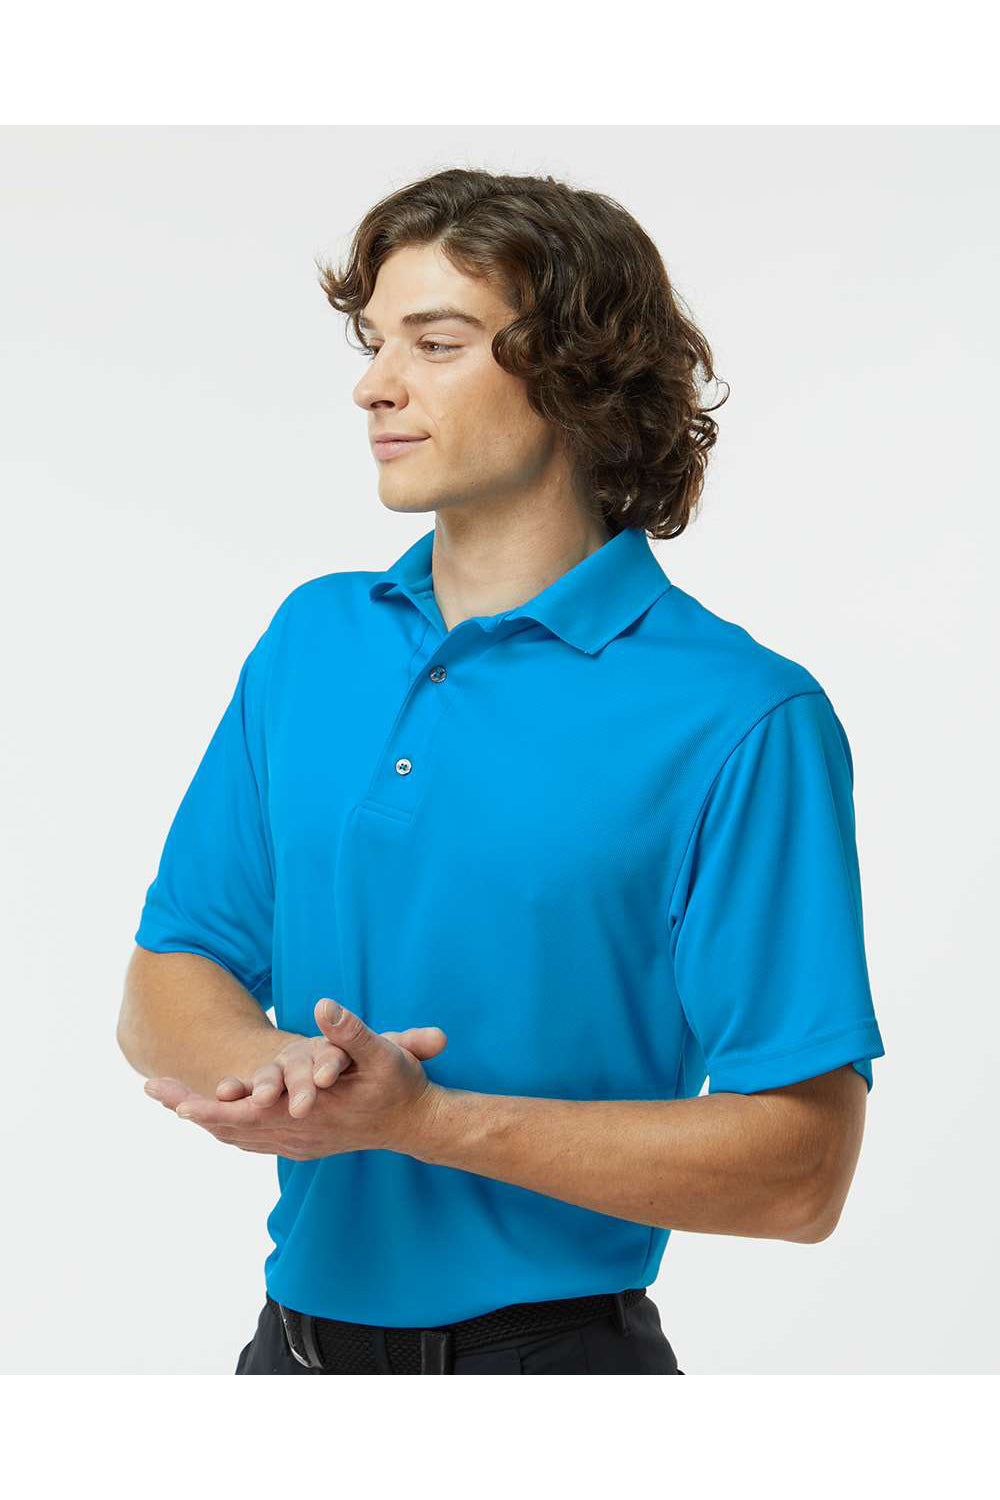 Paragon 100 Mens Saratoga Performance Mini Mesh Short Sleeve Polo Shirt Turquoise Blue Model Side